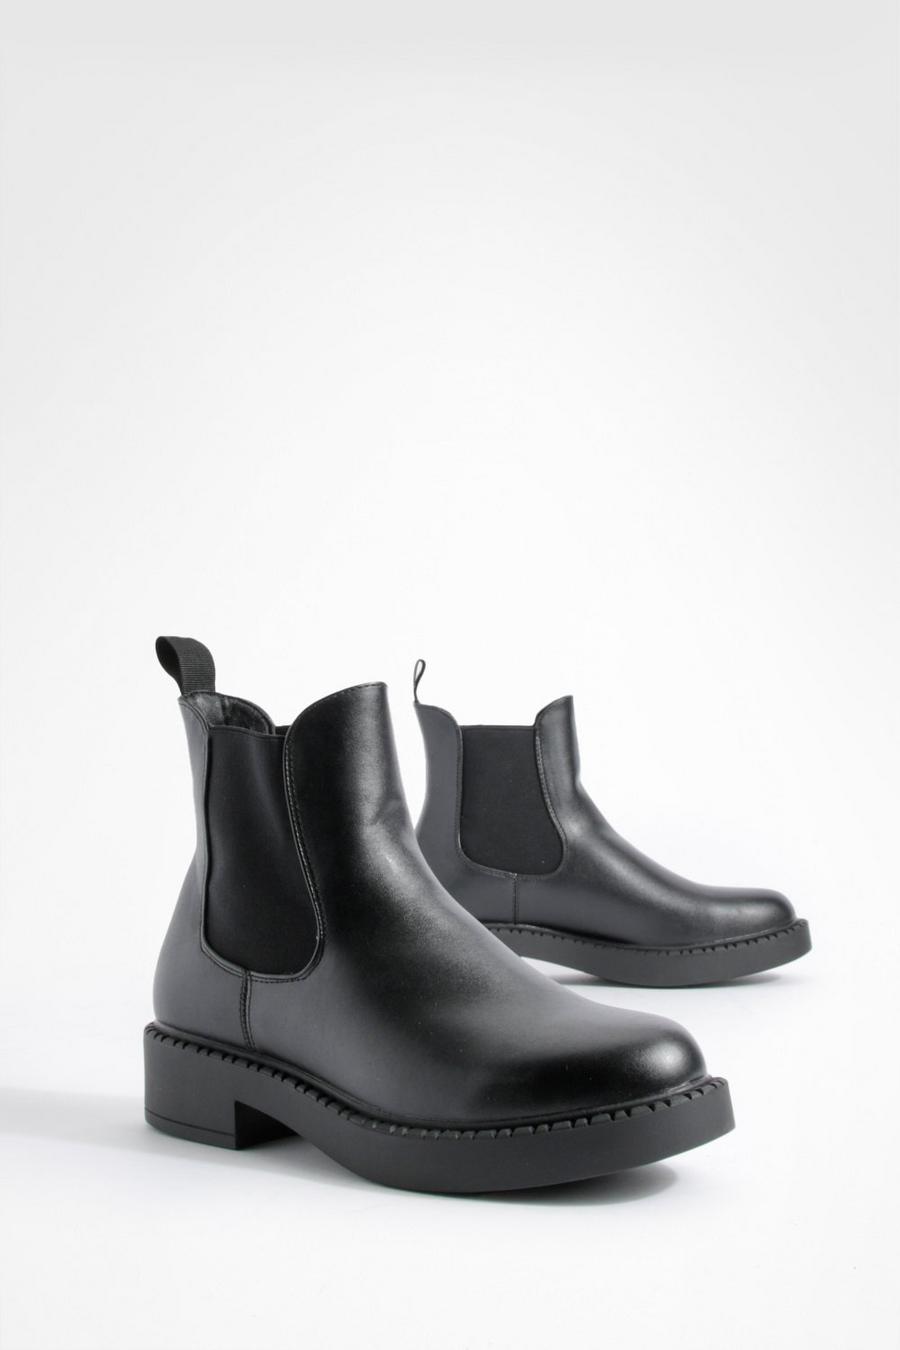 Black zapatillas de running Inov-8 mujer pie normal talla 41.5  image number 1